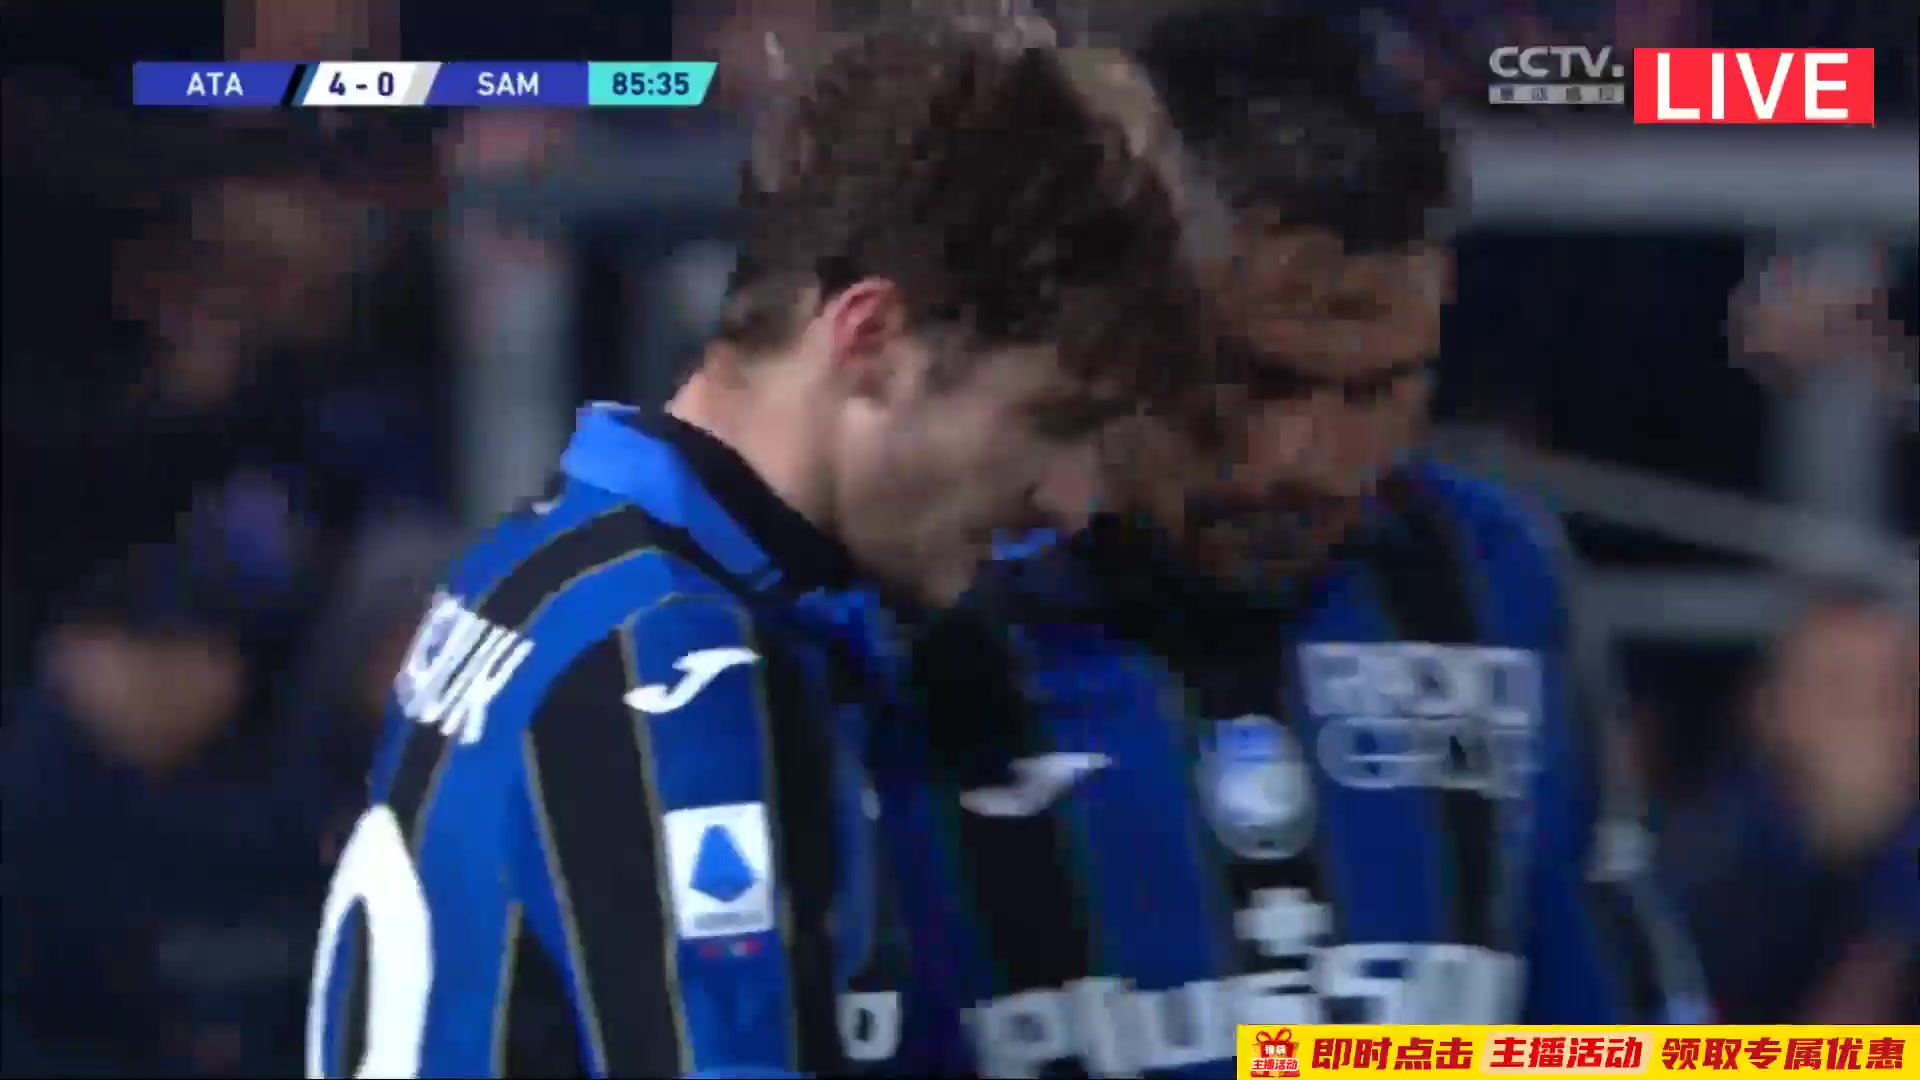 Serie A Atalanta Vs Sampdoria  Goal in 85 min, Score 4:0